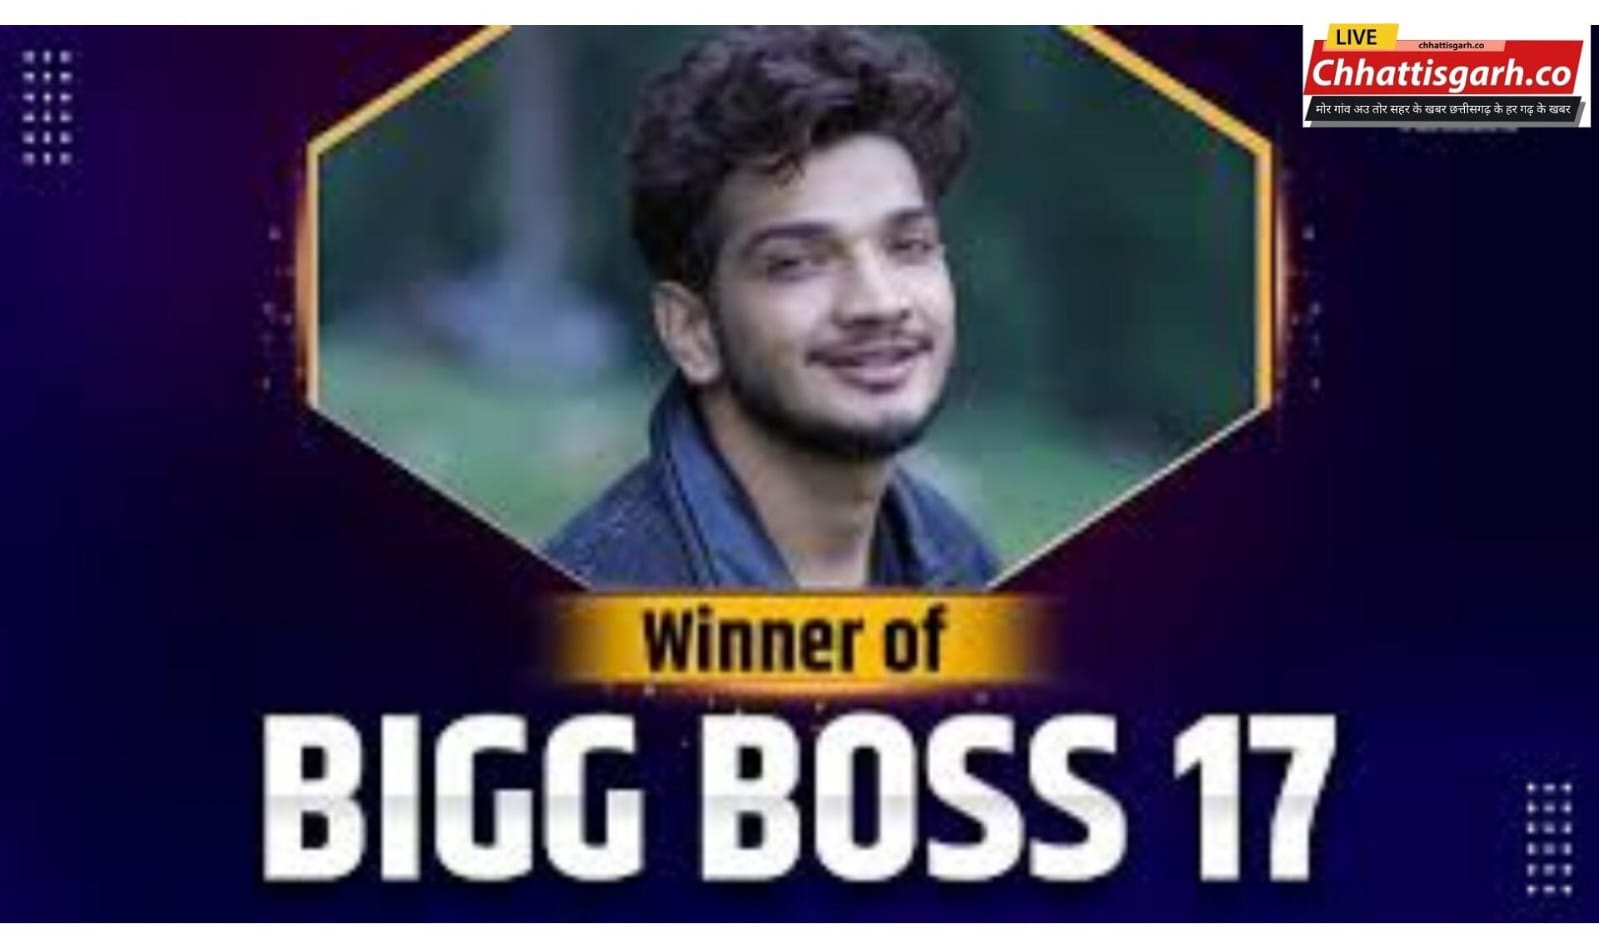 Bigg Boss 17 : मुनव्वर फारूकी बने विजेता, ट्रॉफी के साथ जीती बड़ा कैश प्राइज